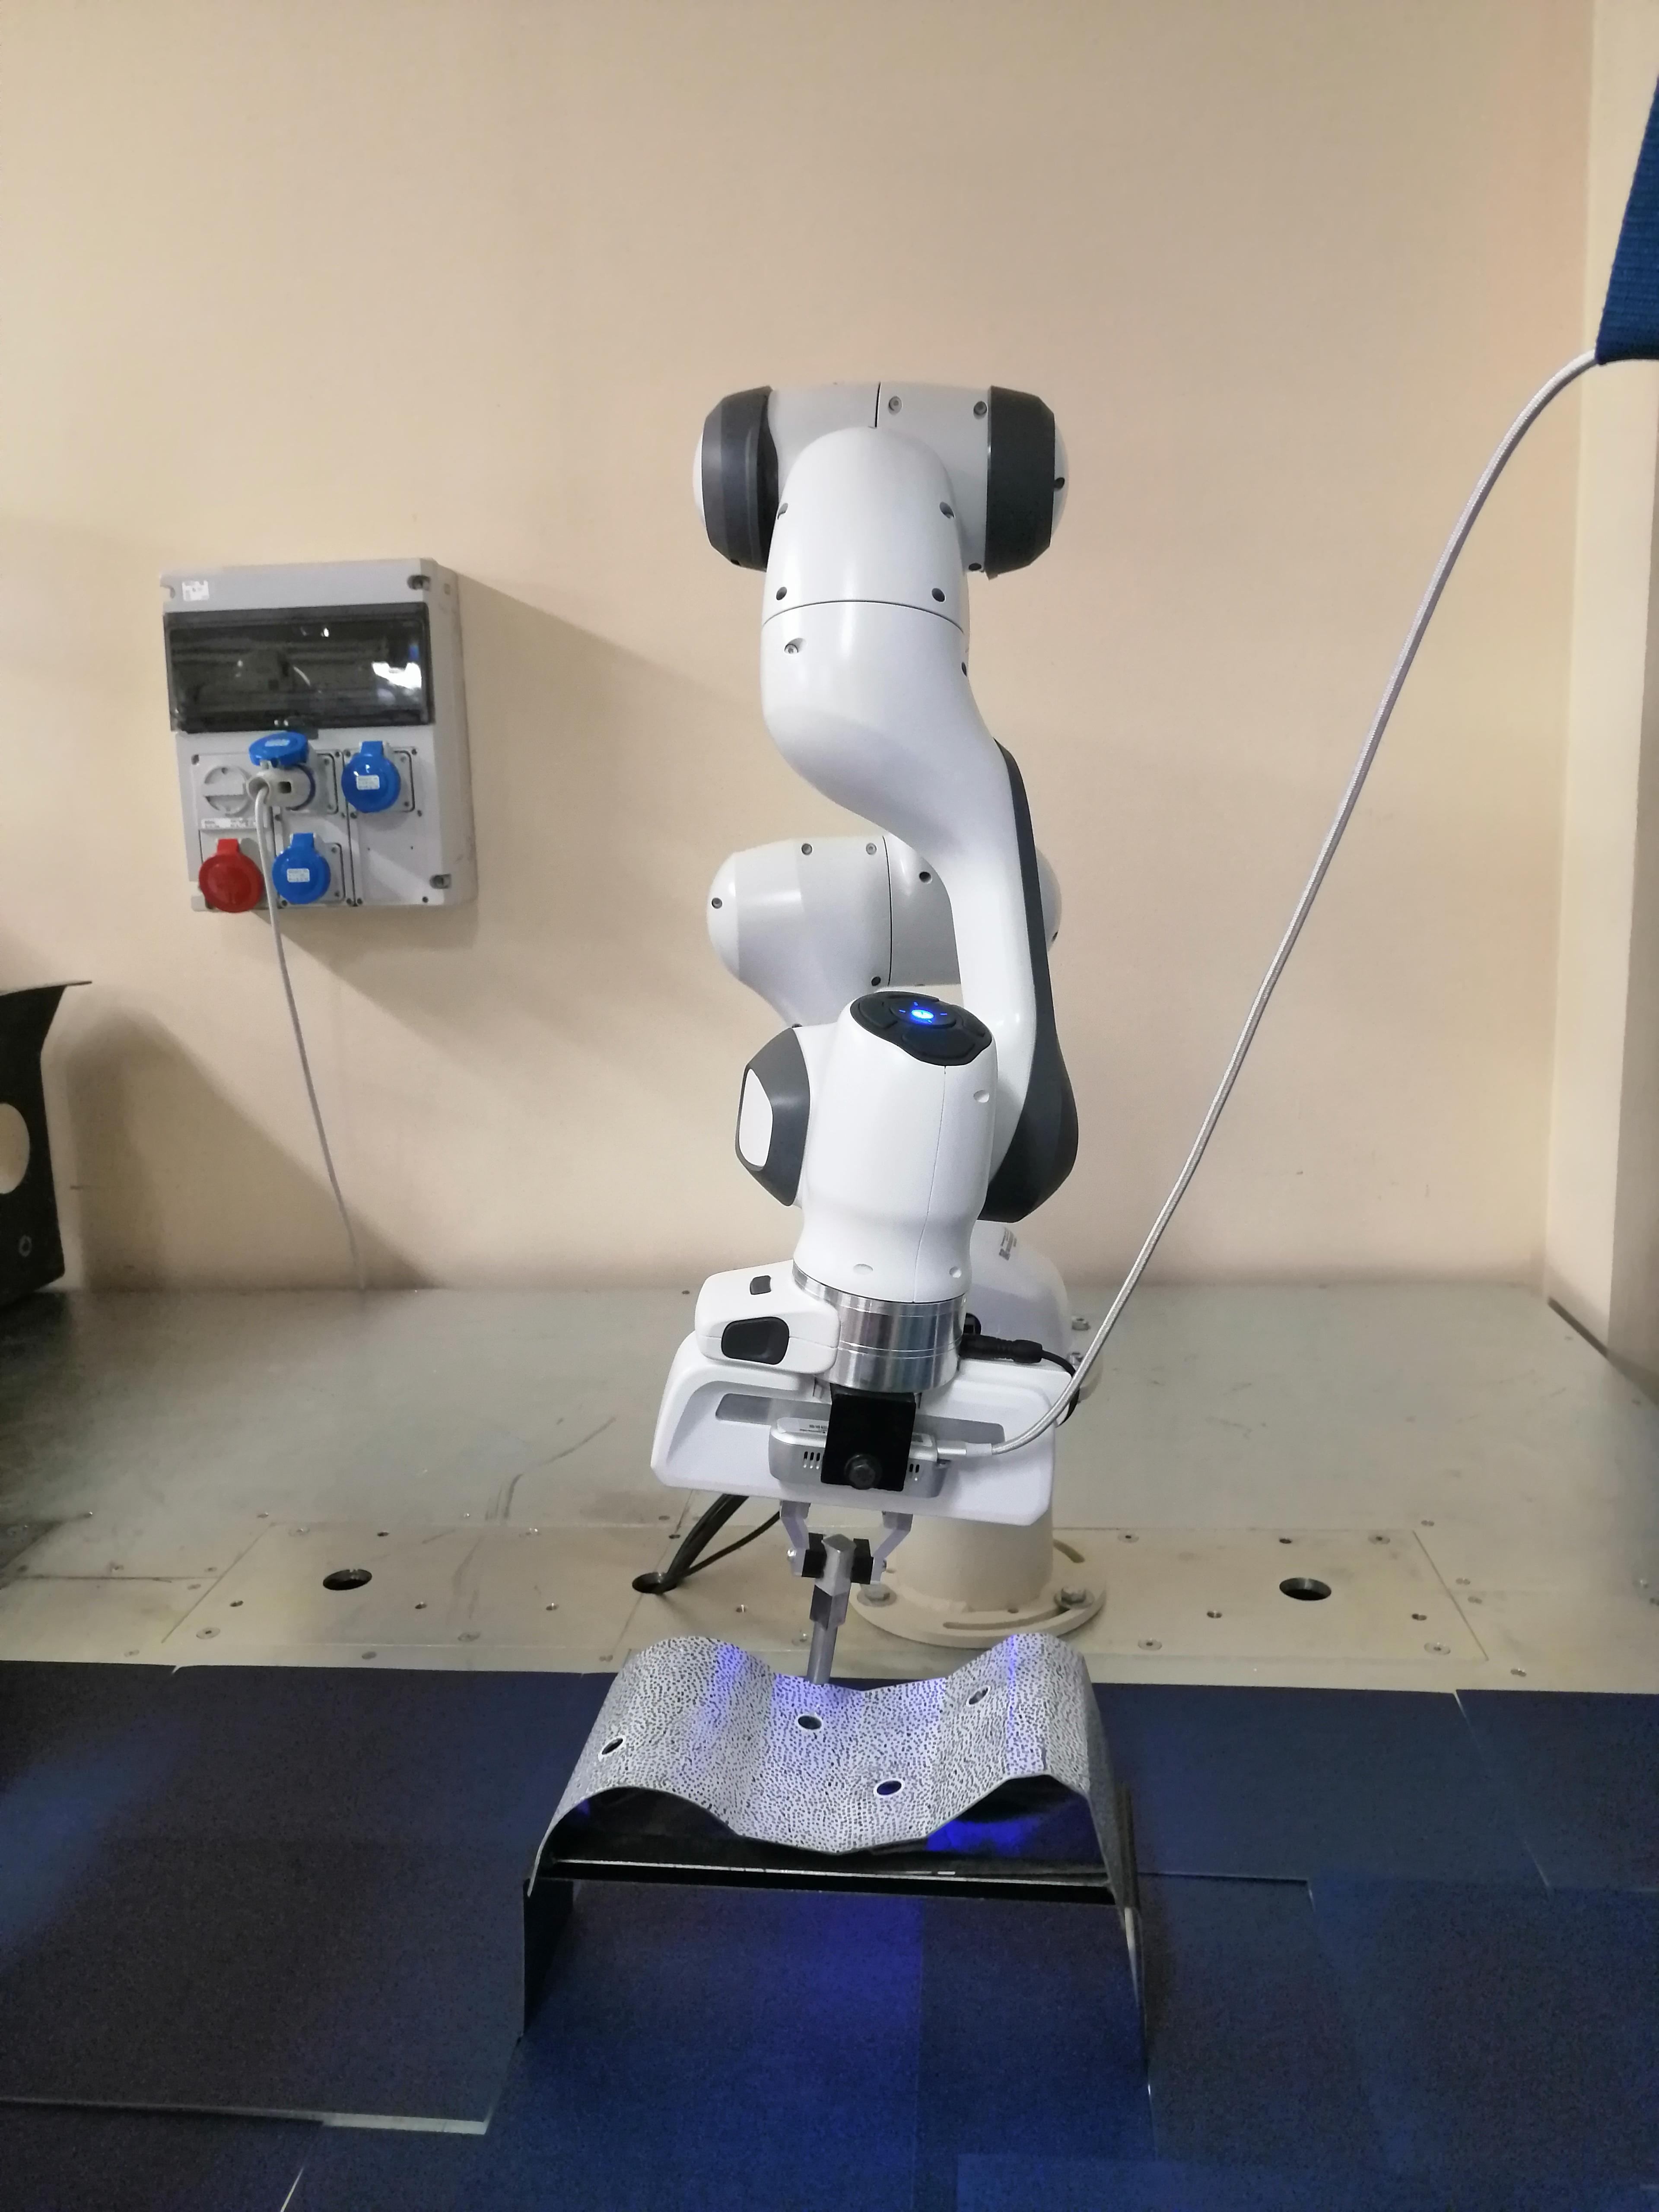 Applicazioni avanzate di robotica per l’industria